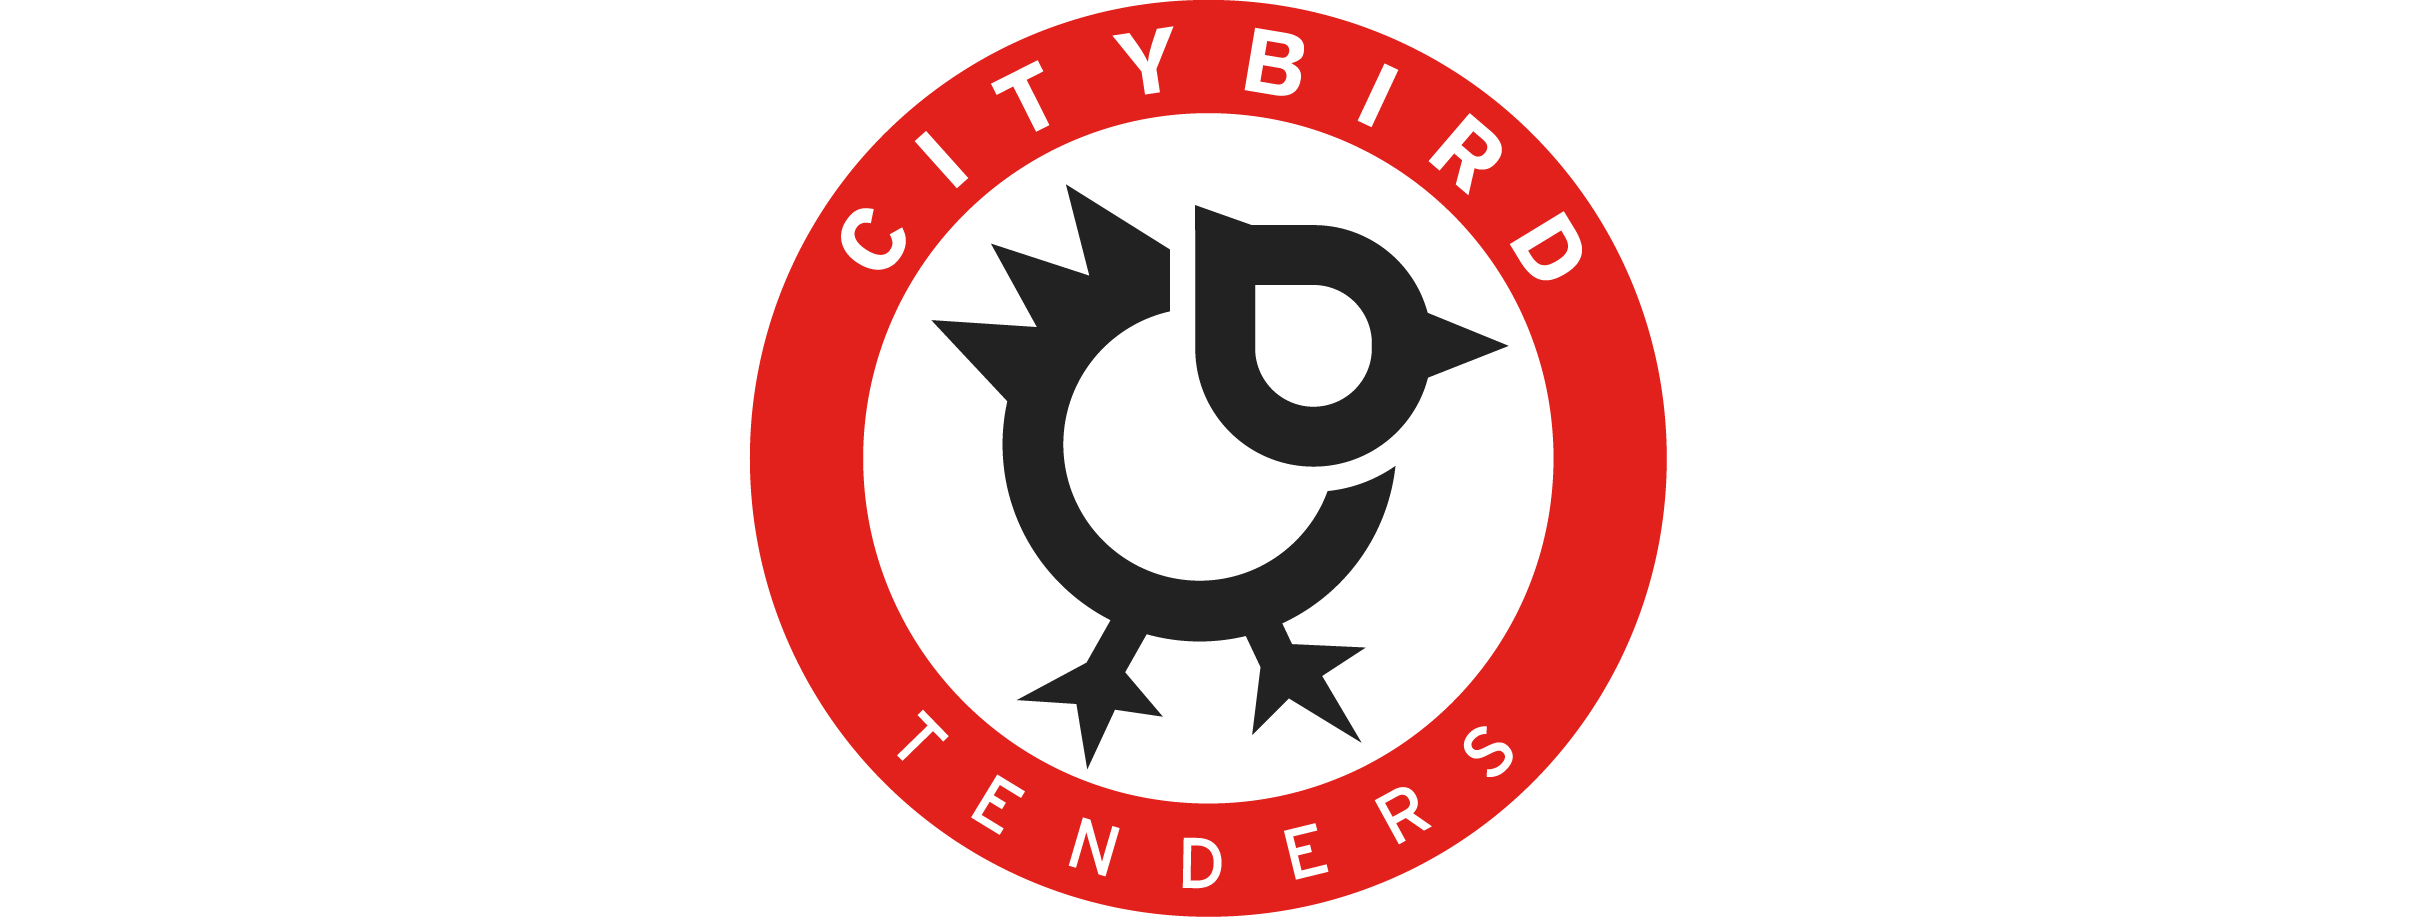 CityBird Catering